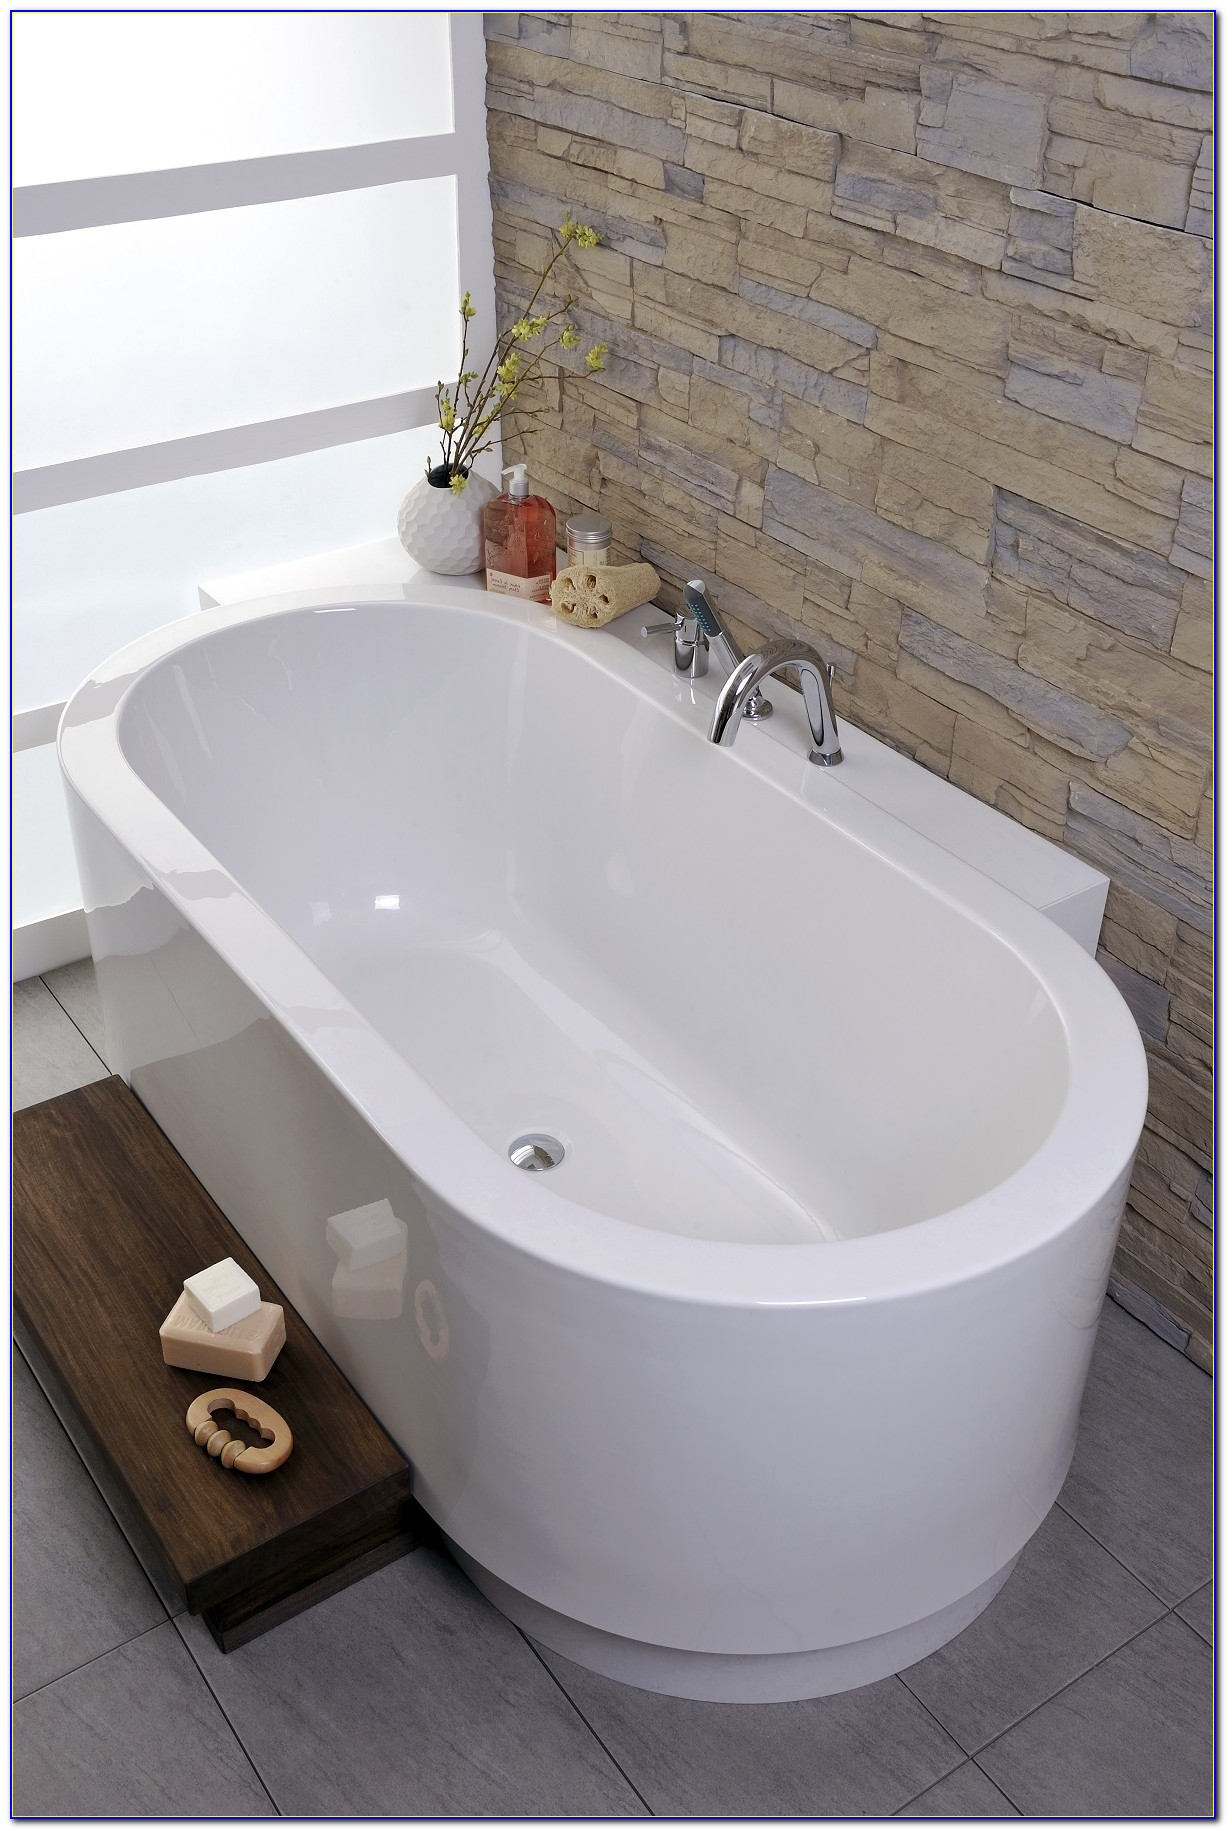 60 Freestanding Tub With Deck Mount Faucet Faucet Home Design regarding dimensions 1227 X 1830